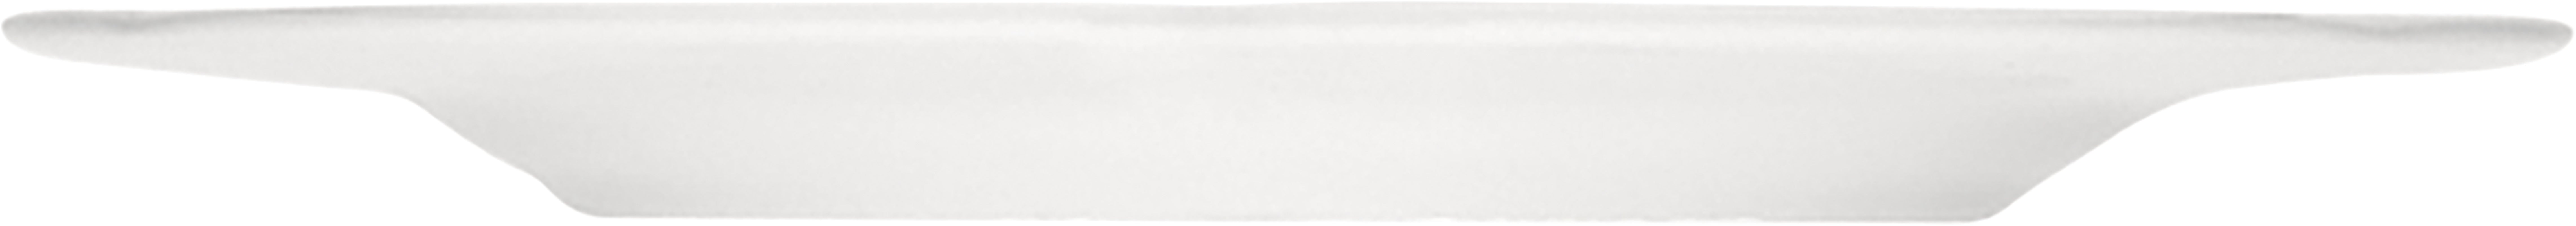 Saladier transparent 26cm - LAURENT BENDICHE